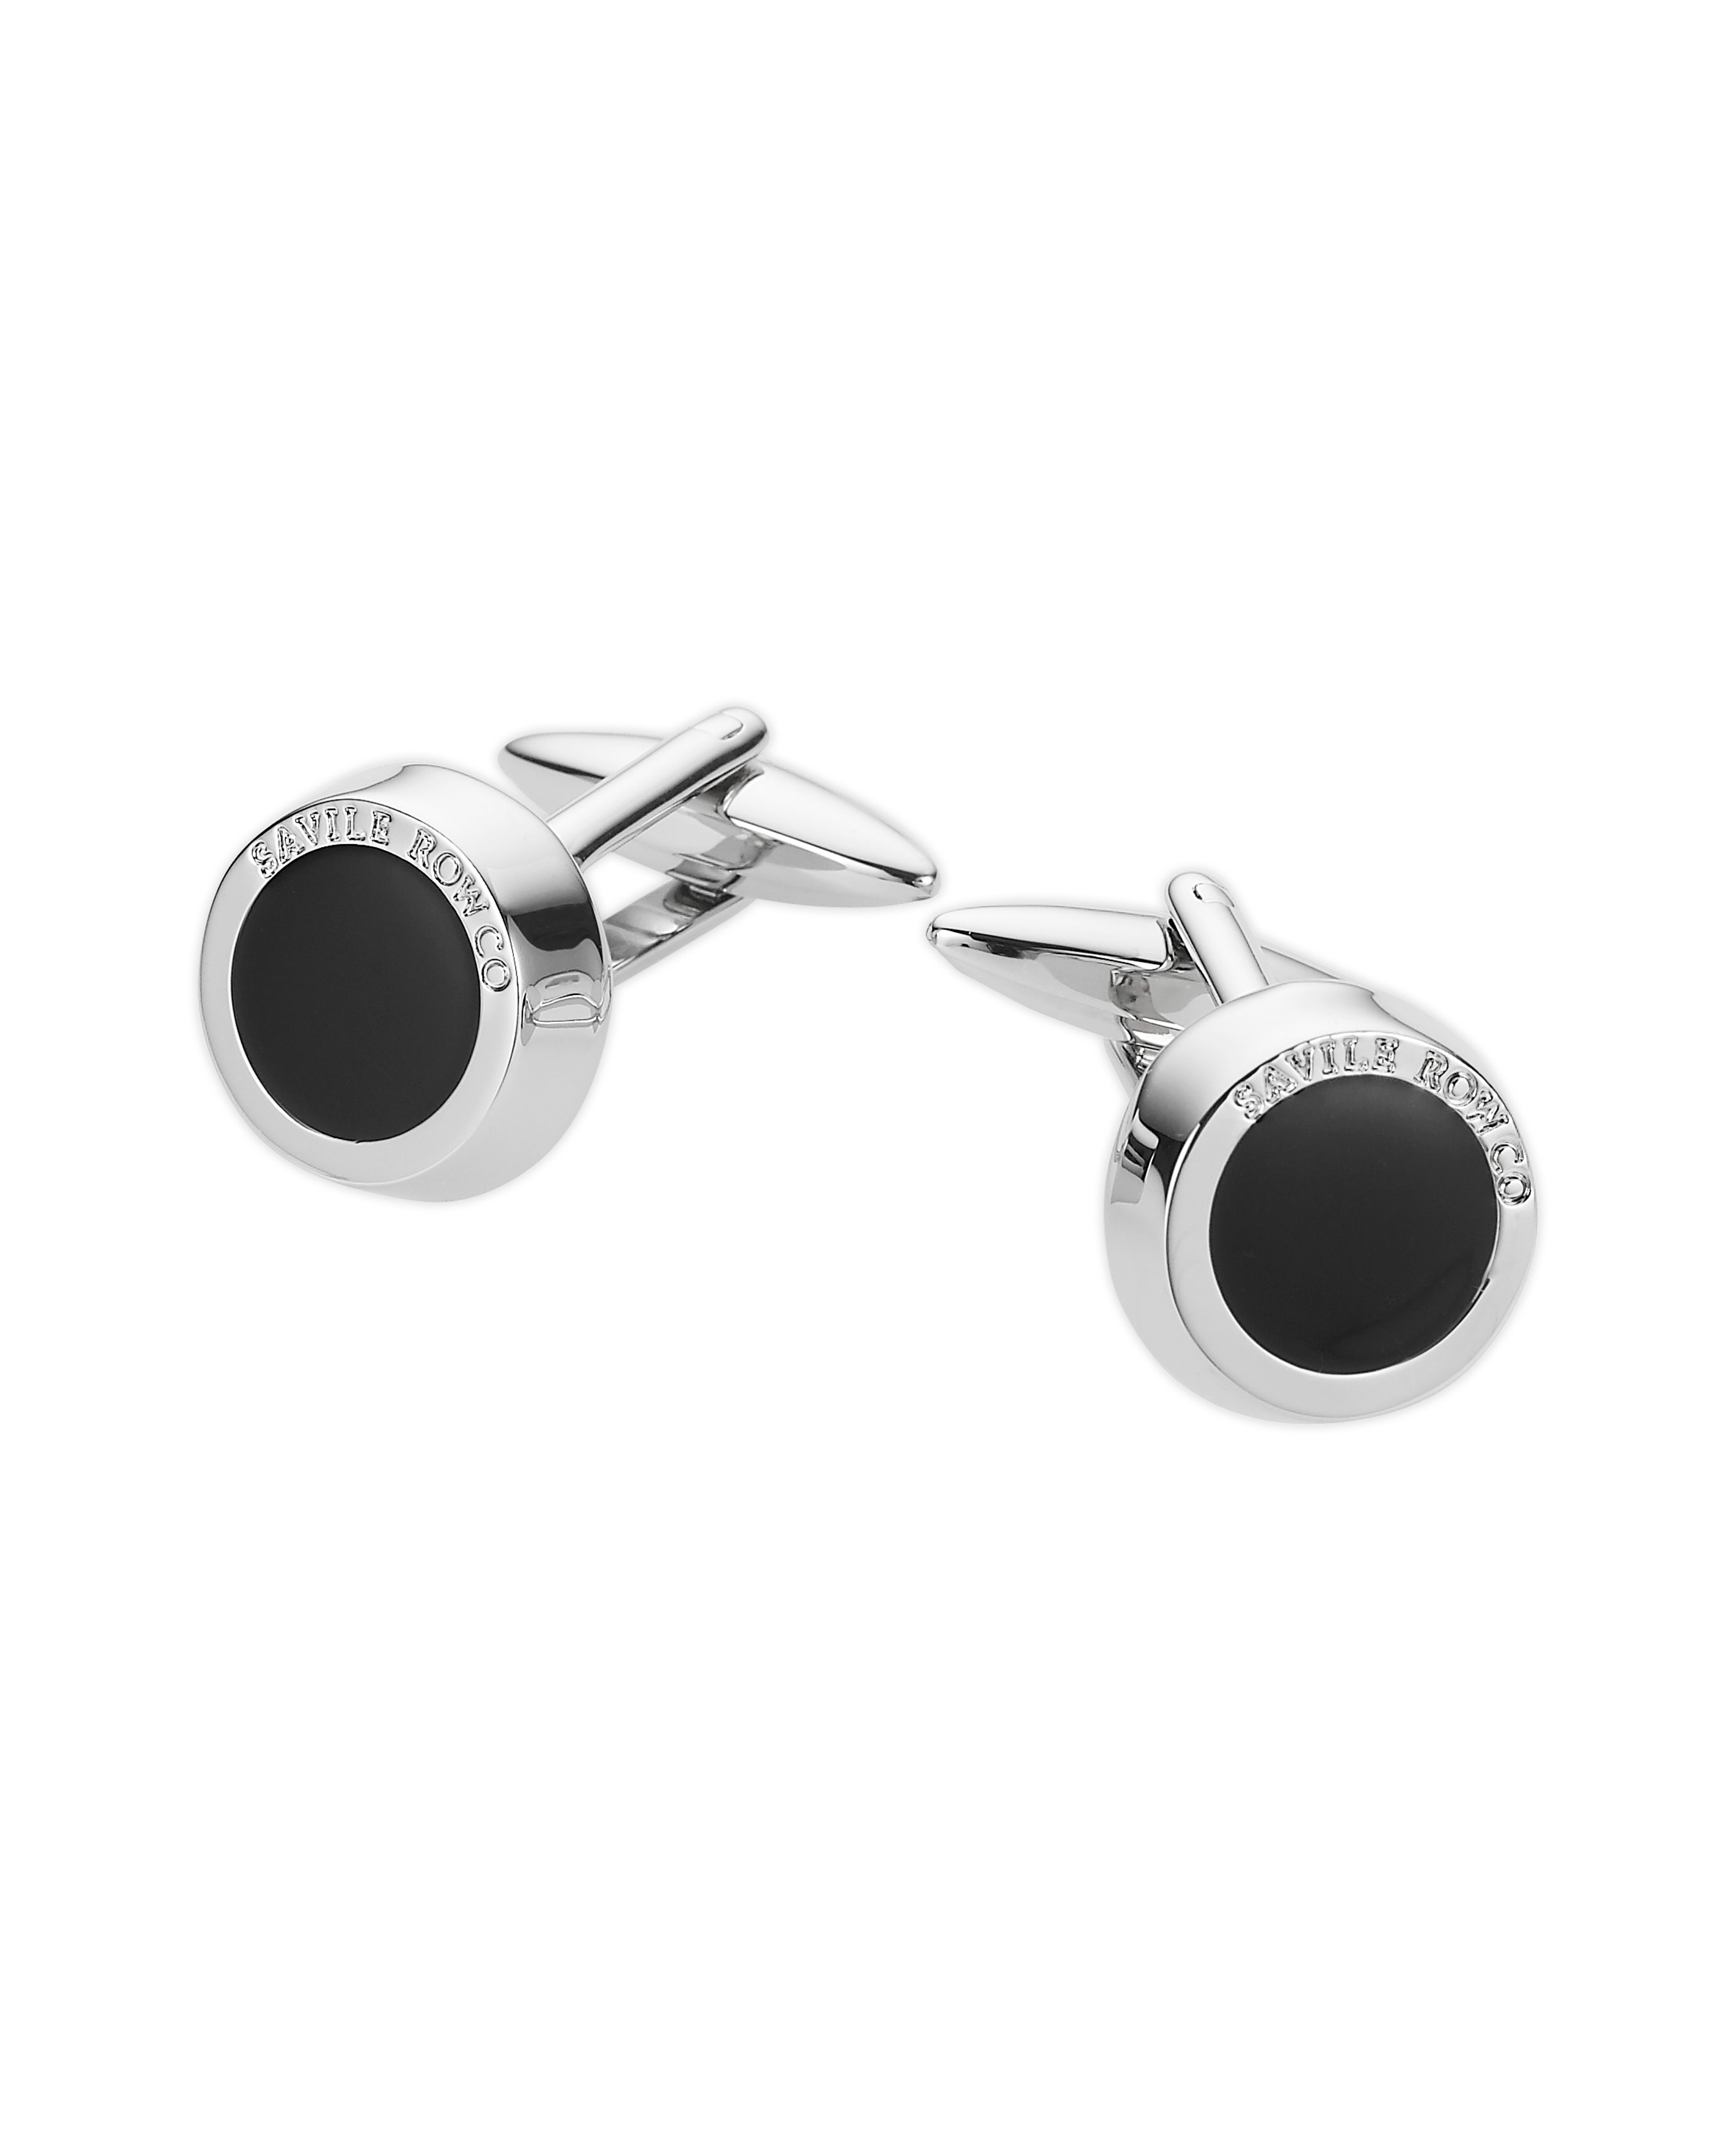 Savile Row Company Black Signature Silver Tone Cufflinks